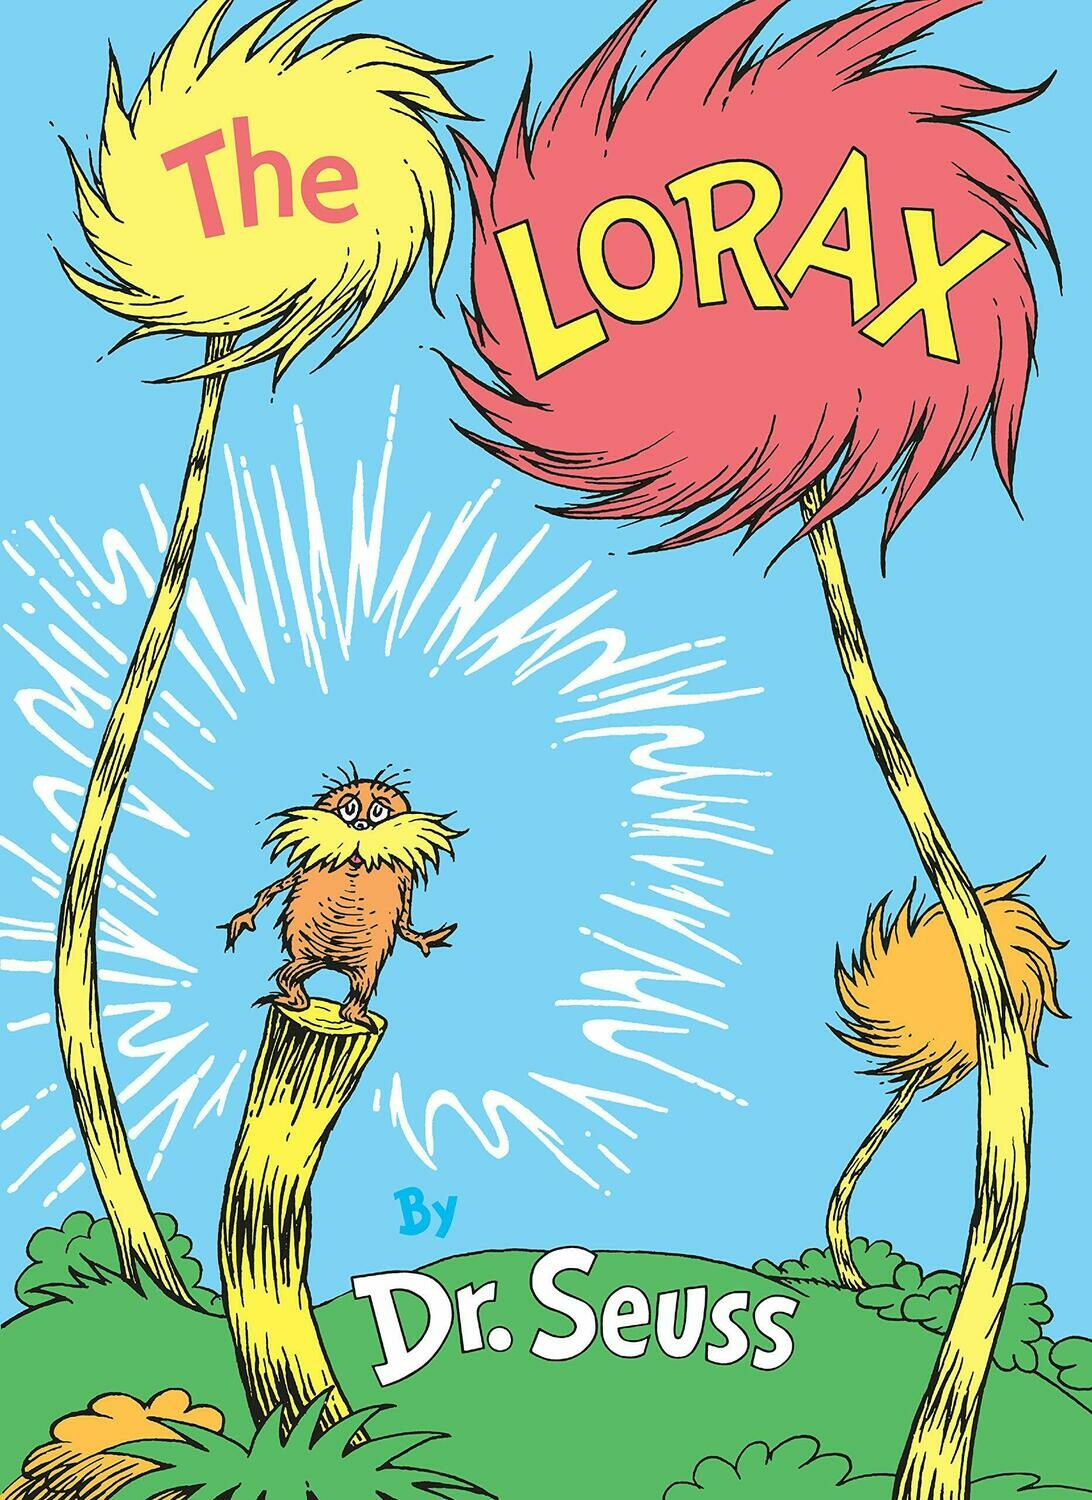 The Lorax - Seuss